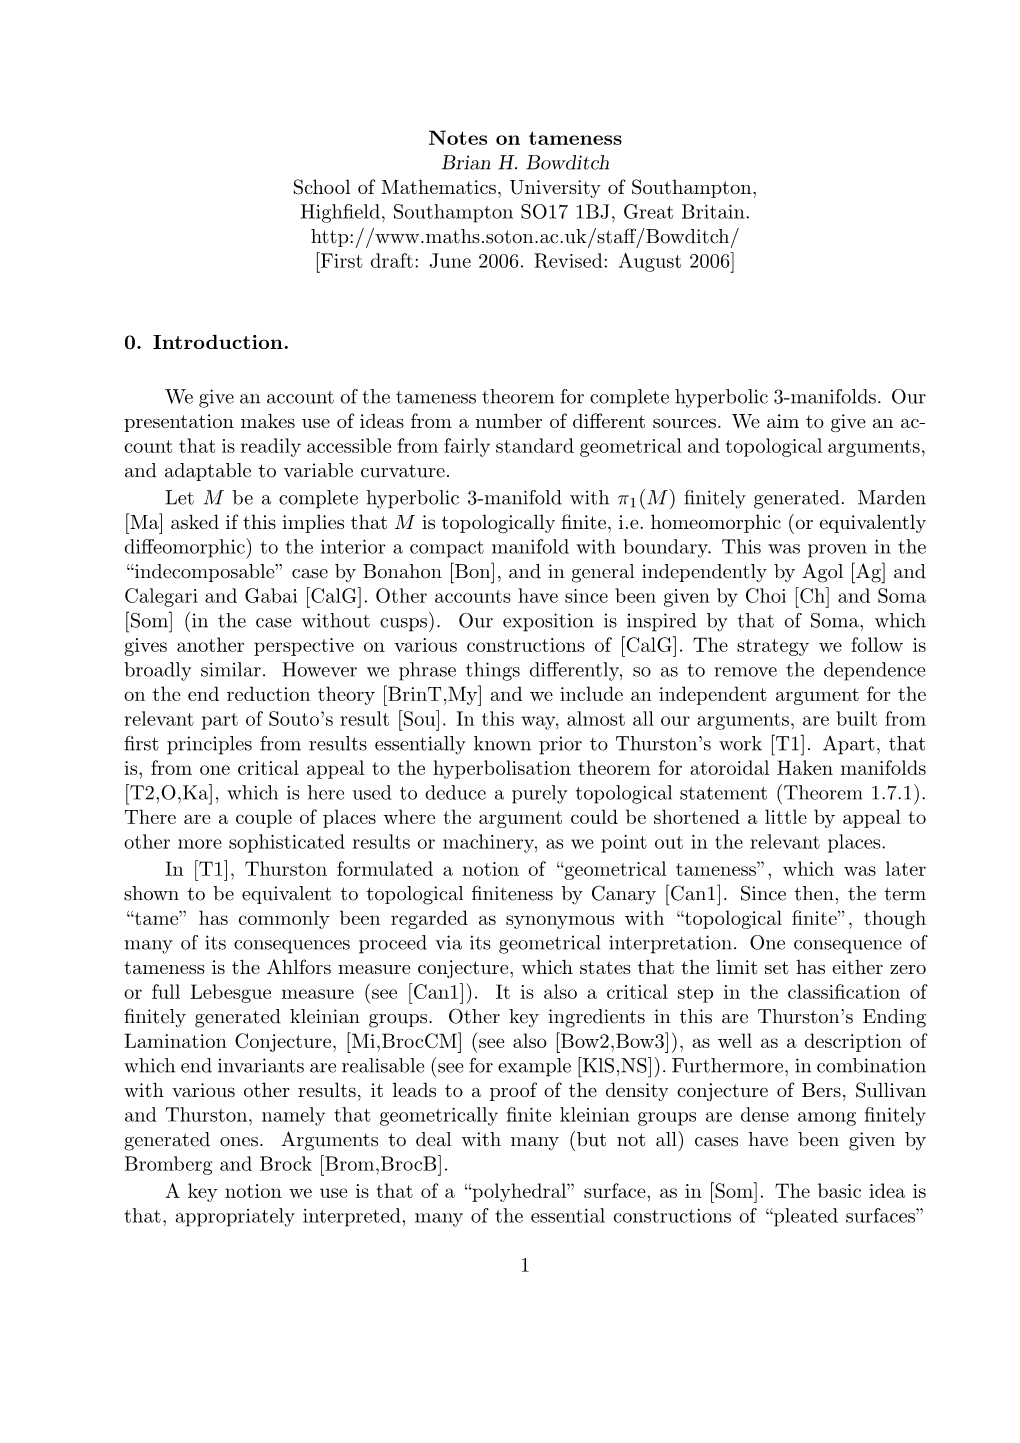 Notes on Tameness Brian H. Bowditch School of Mathematics, University of Southampton, Highﬁeld, Southampton SO17 1BJ, Great Britain